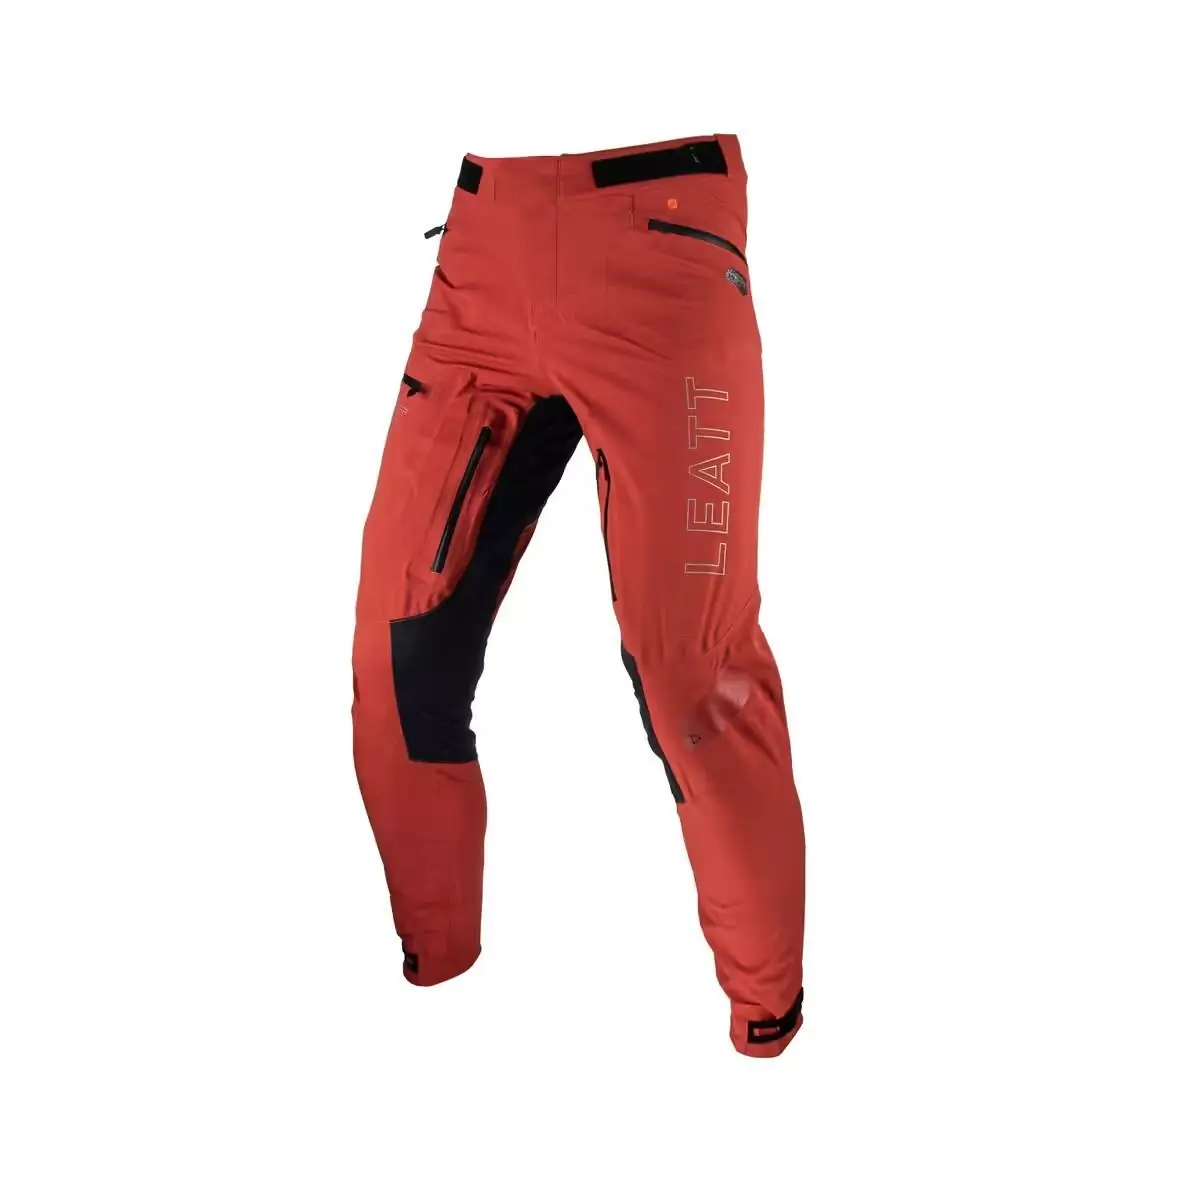 Pantaloni Lunghi MTB Impermeabili HydraDri 5.0 Rosso Taglia XS - image